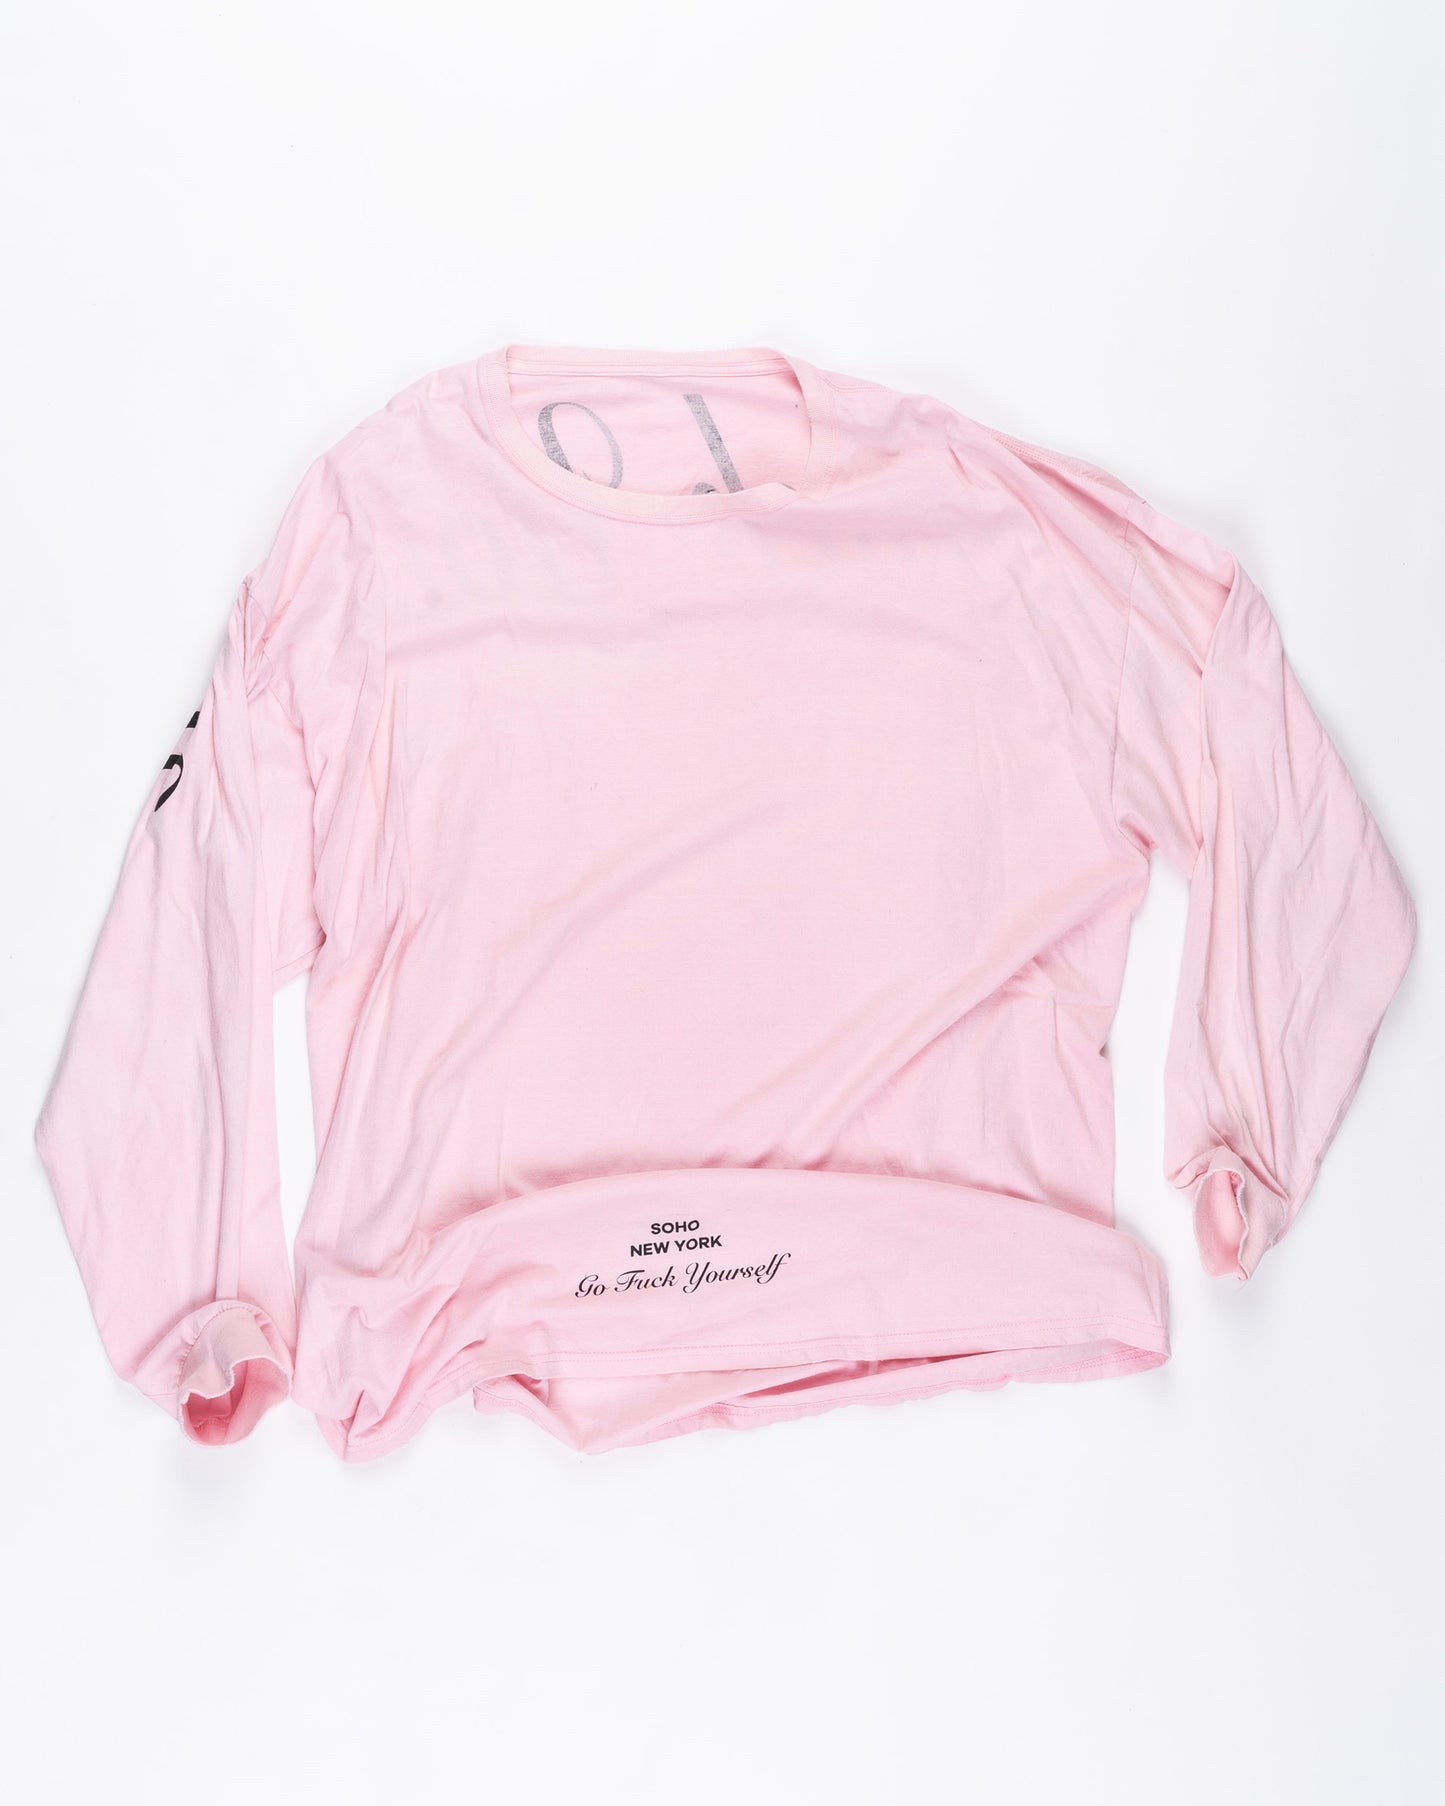 Pink Long Sleeve T-shirt Size: XXLarge